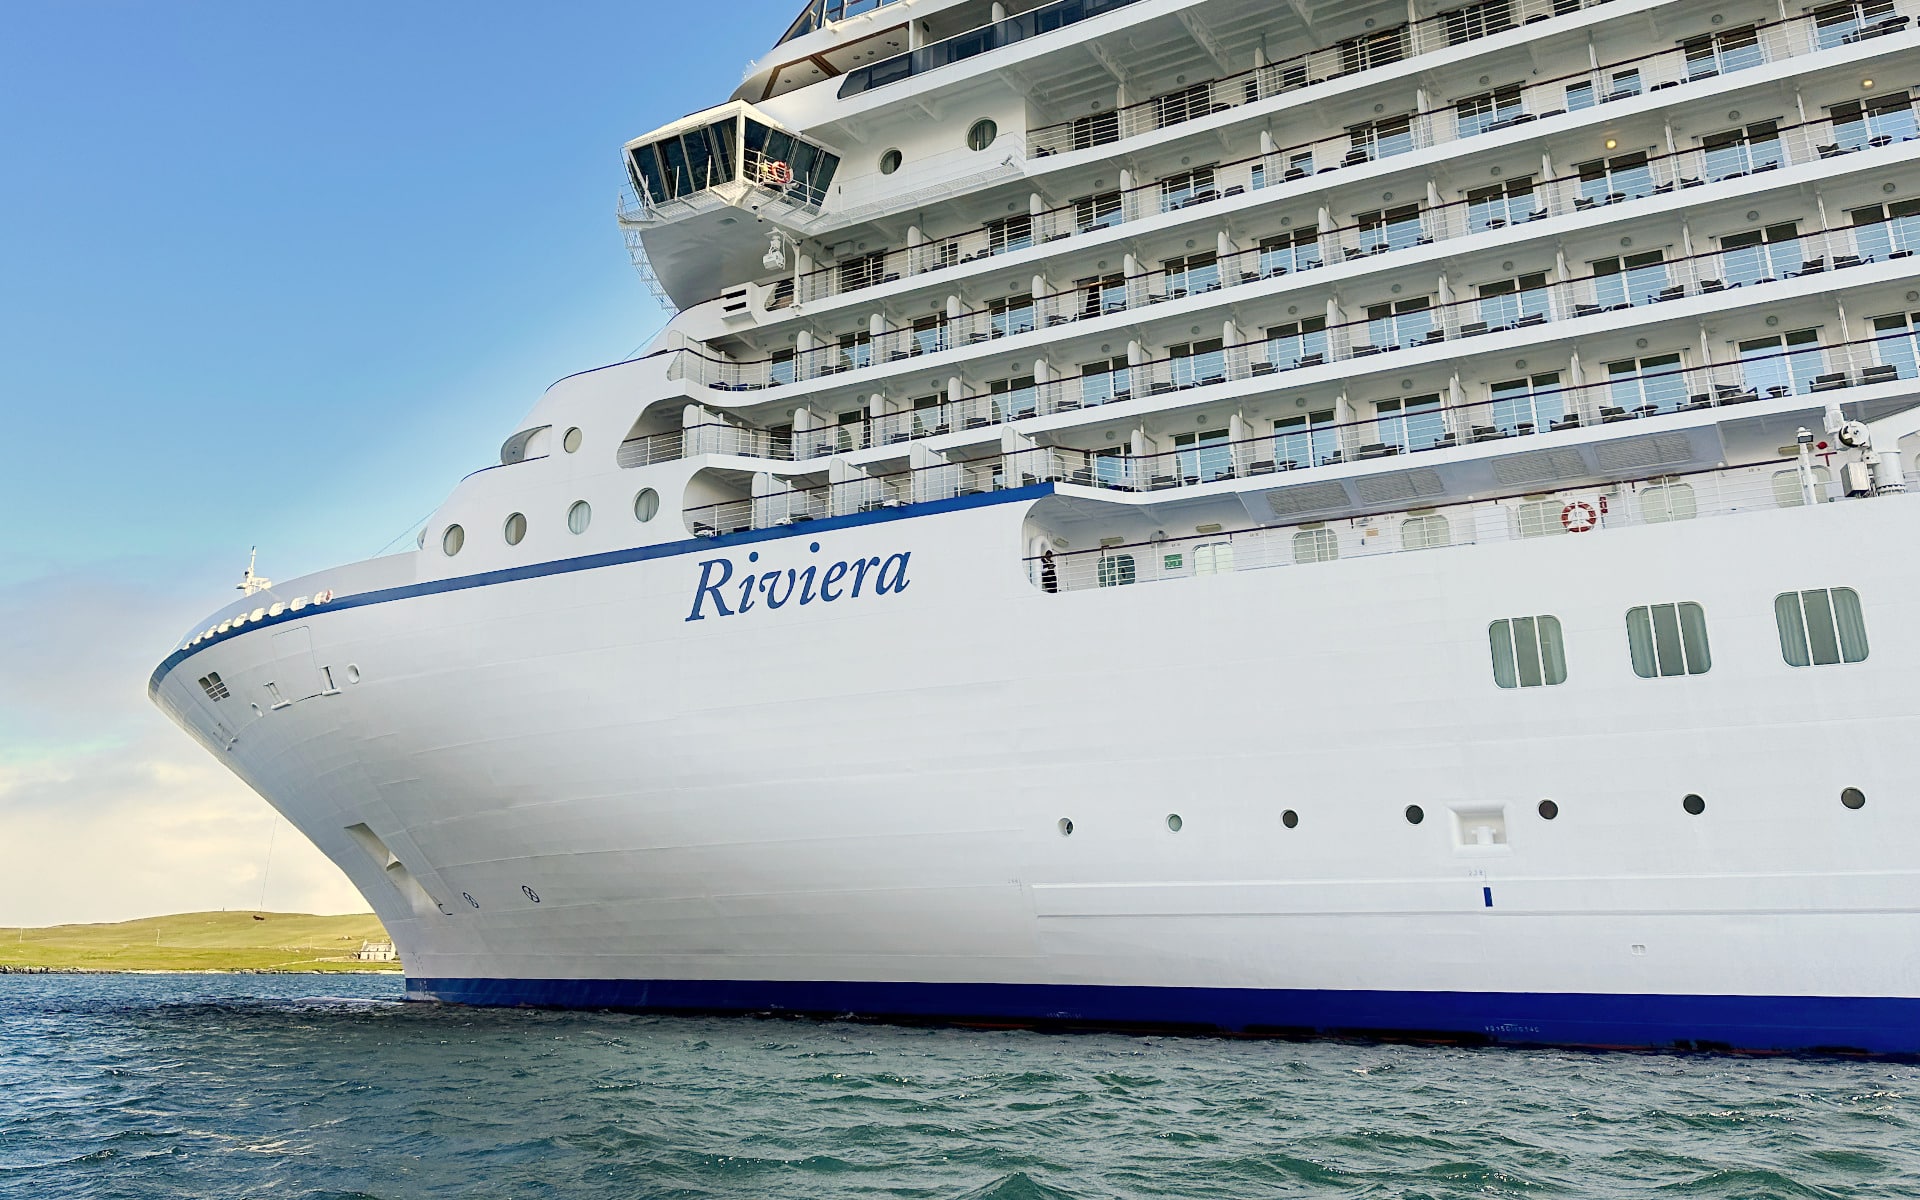 Oceania Cruises Riviera cruise ship.